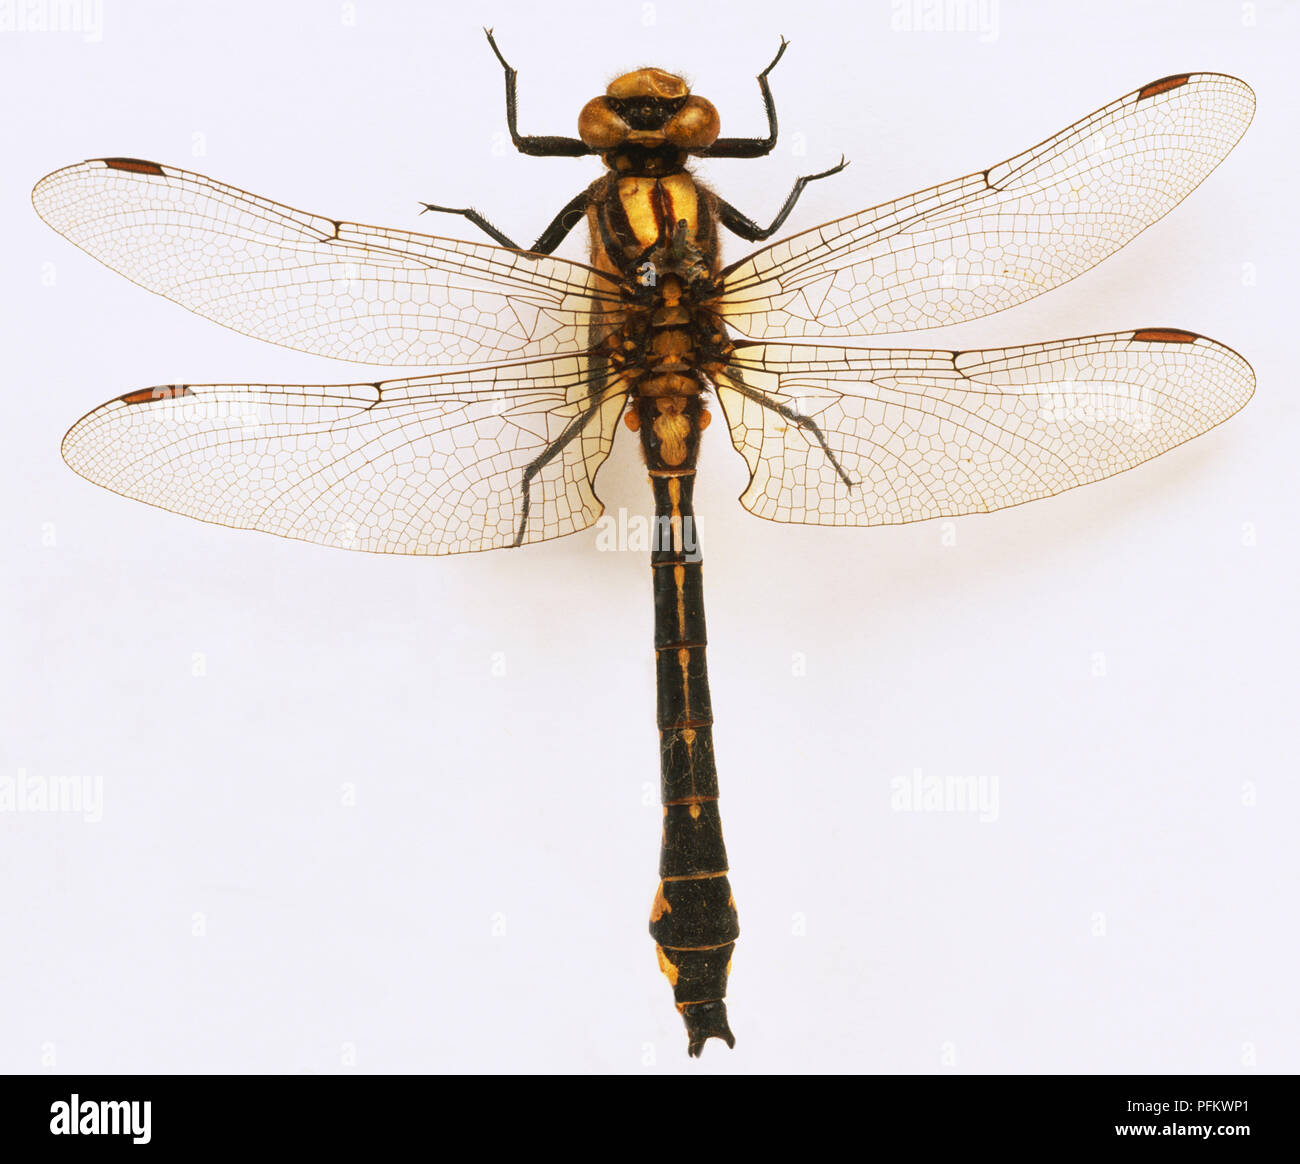 Club-tailed dragonfly (Gomphus Vulgatissimus). Foto Stock